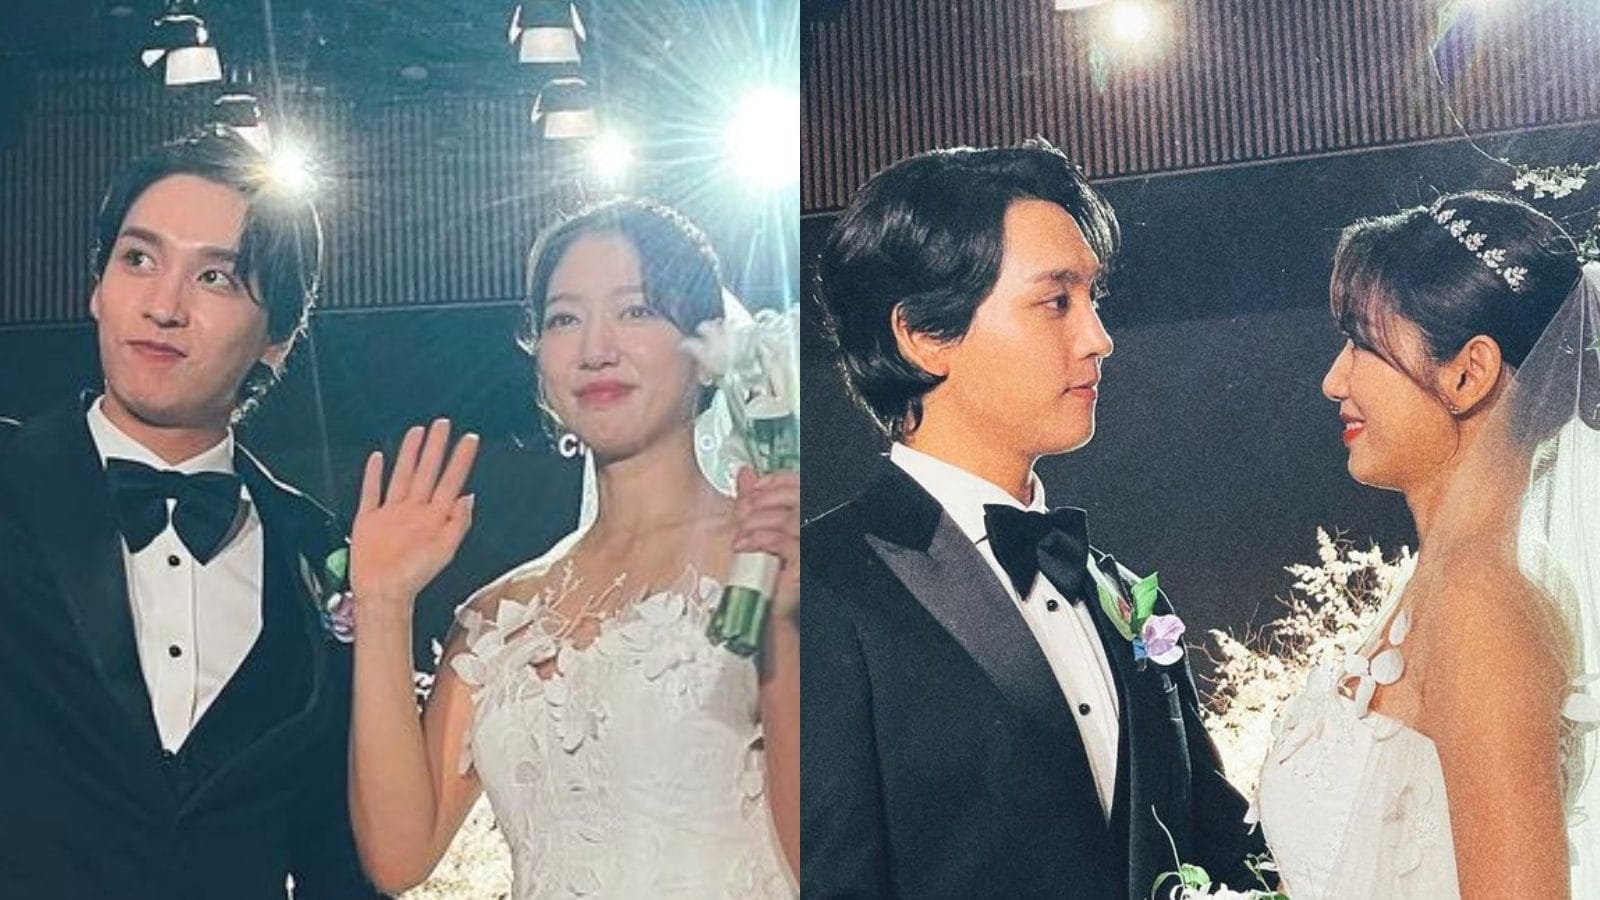 Park Shin-hye, Choi Tae-joon Wedding Pics And Videos Surface